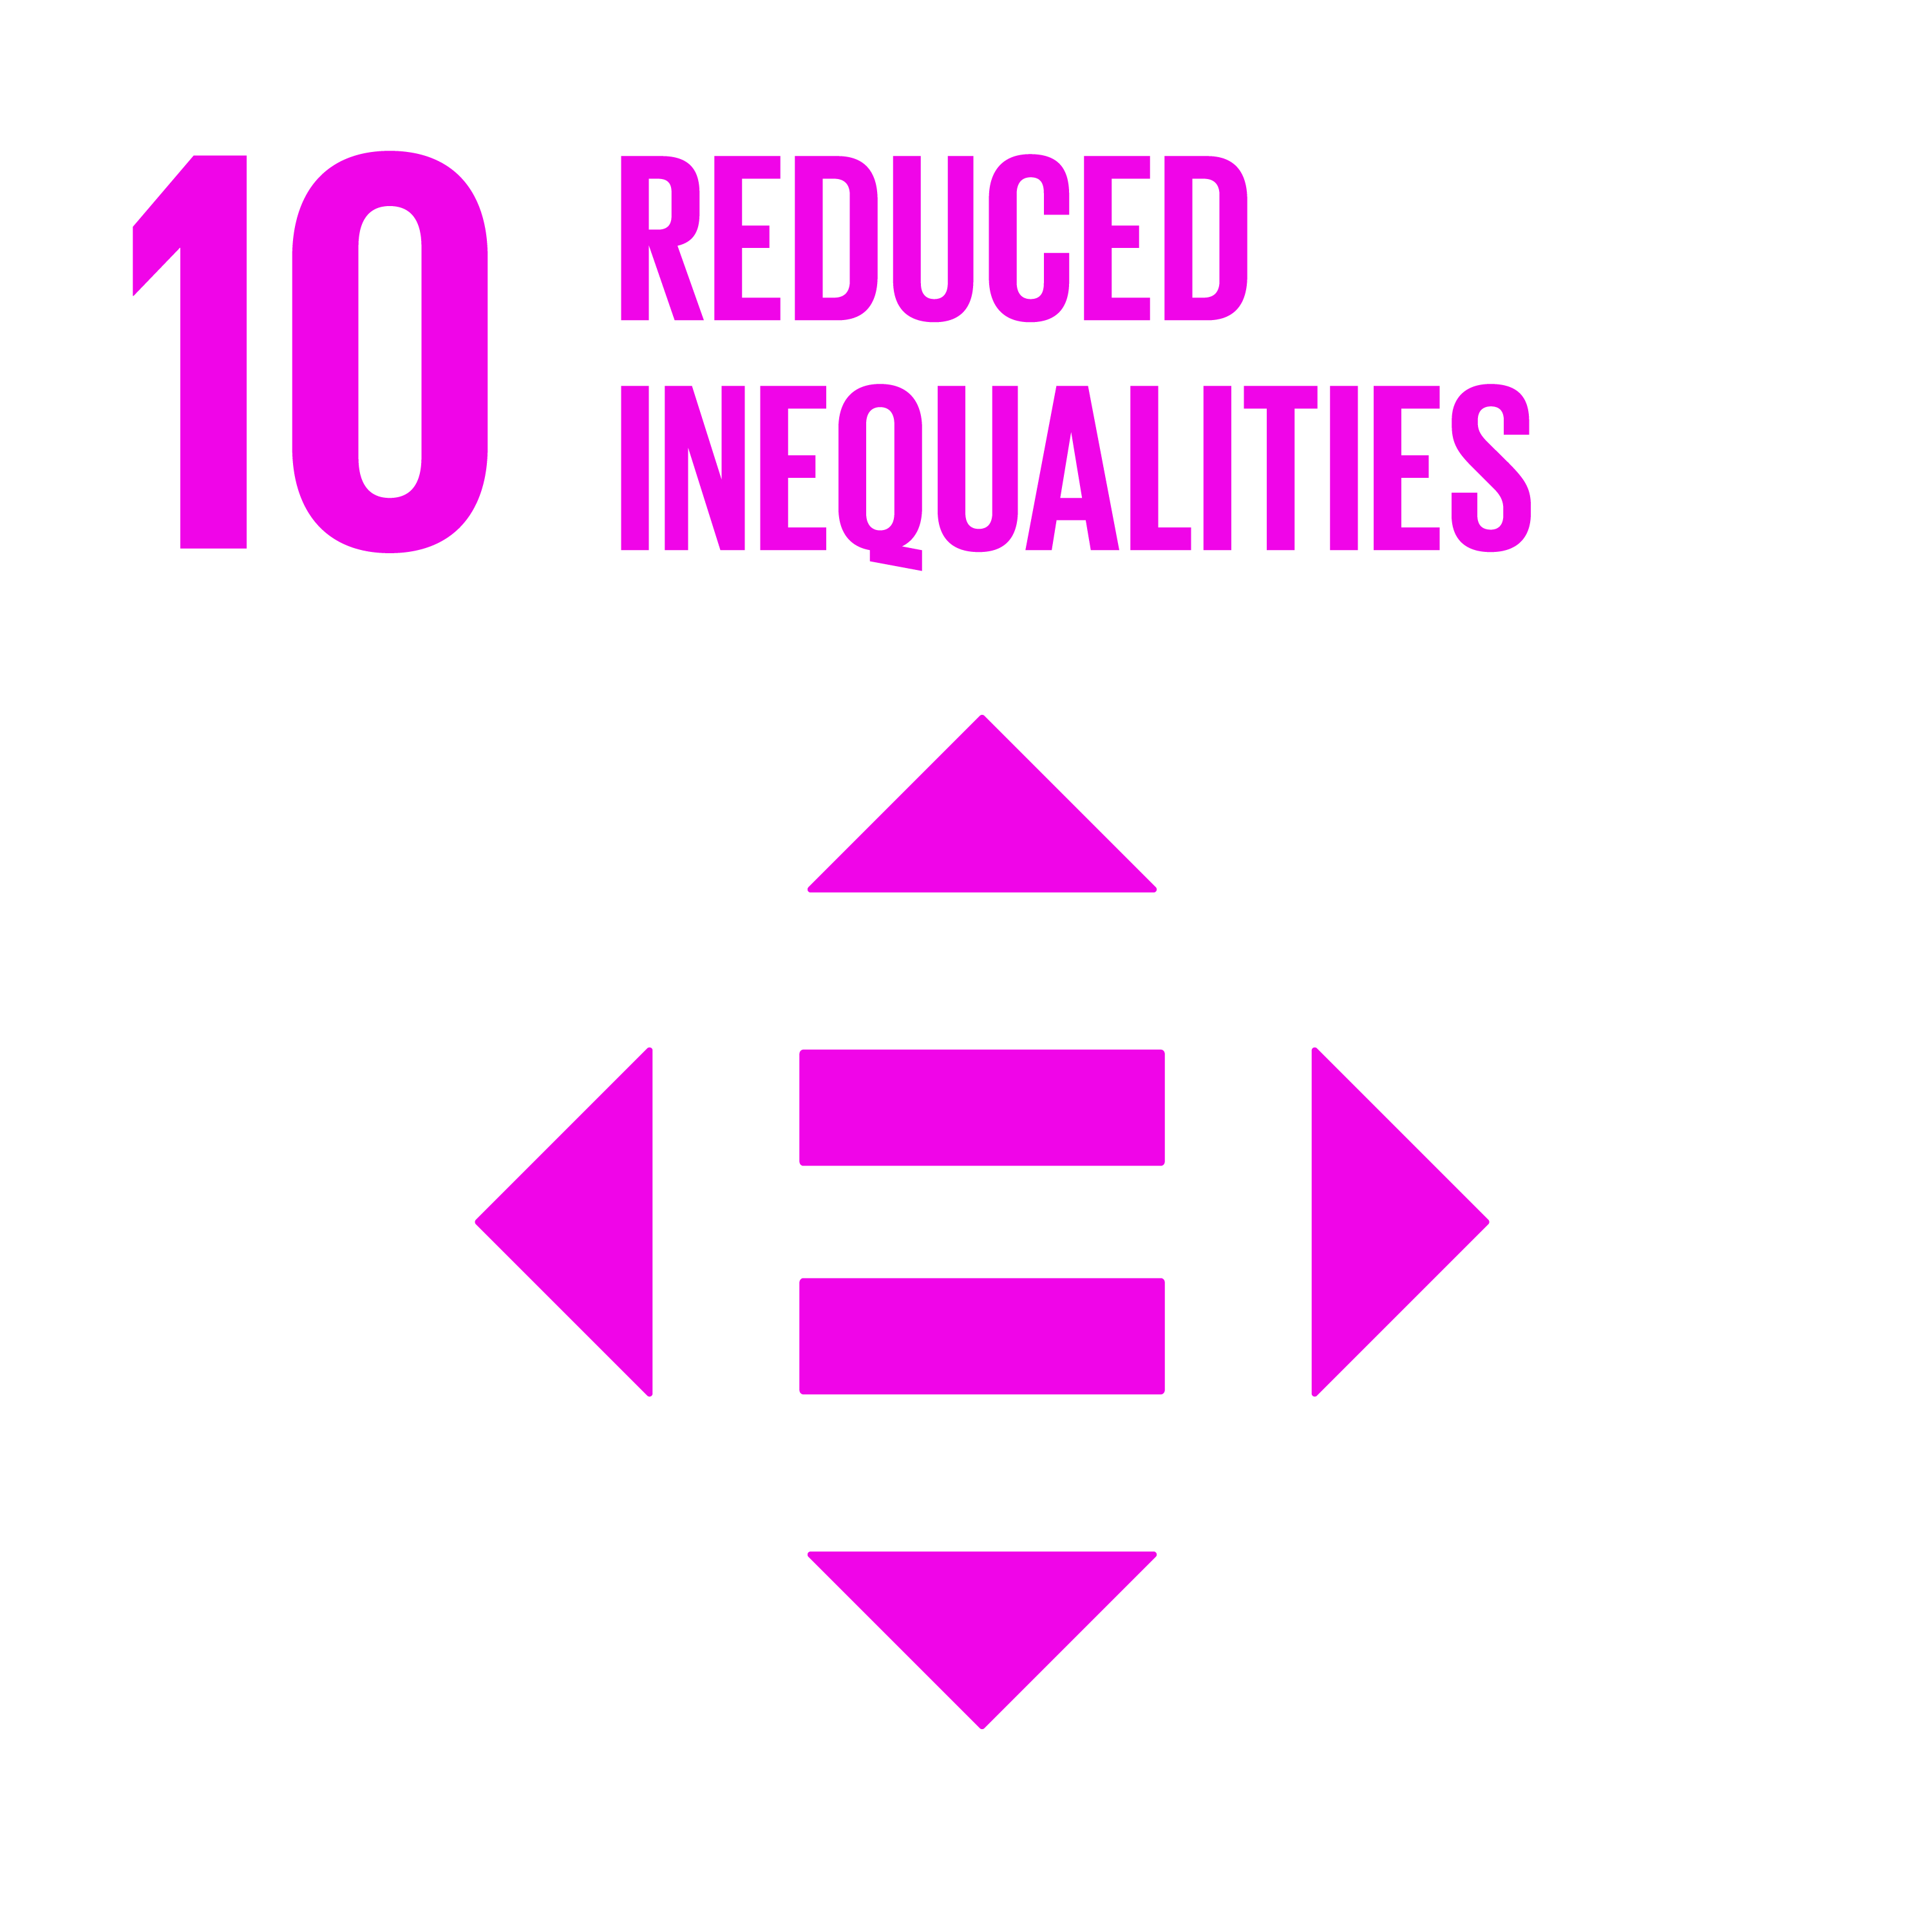 Sustainable development goals: Reduced inequalities